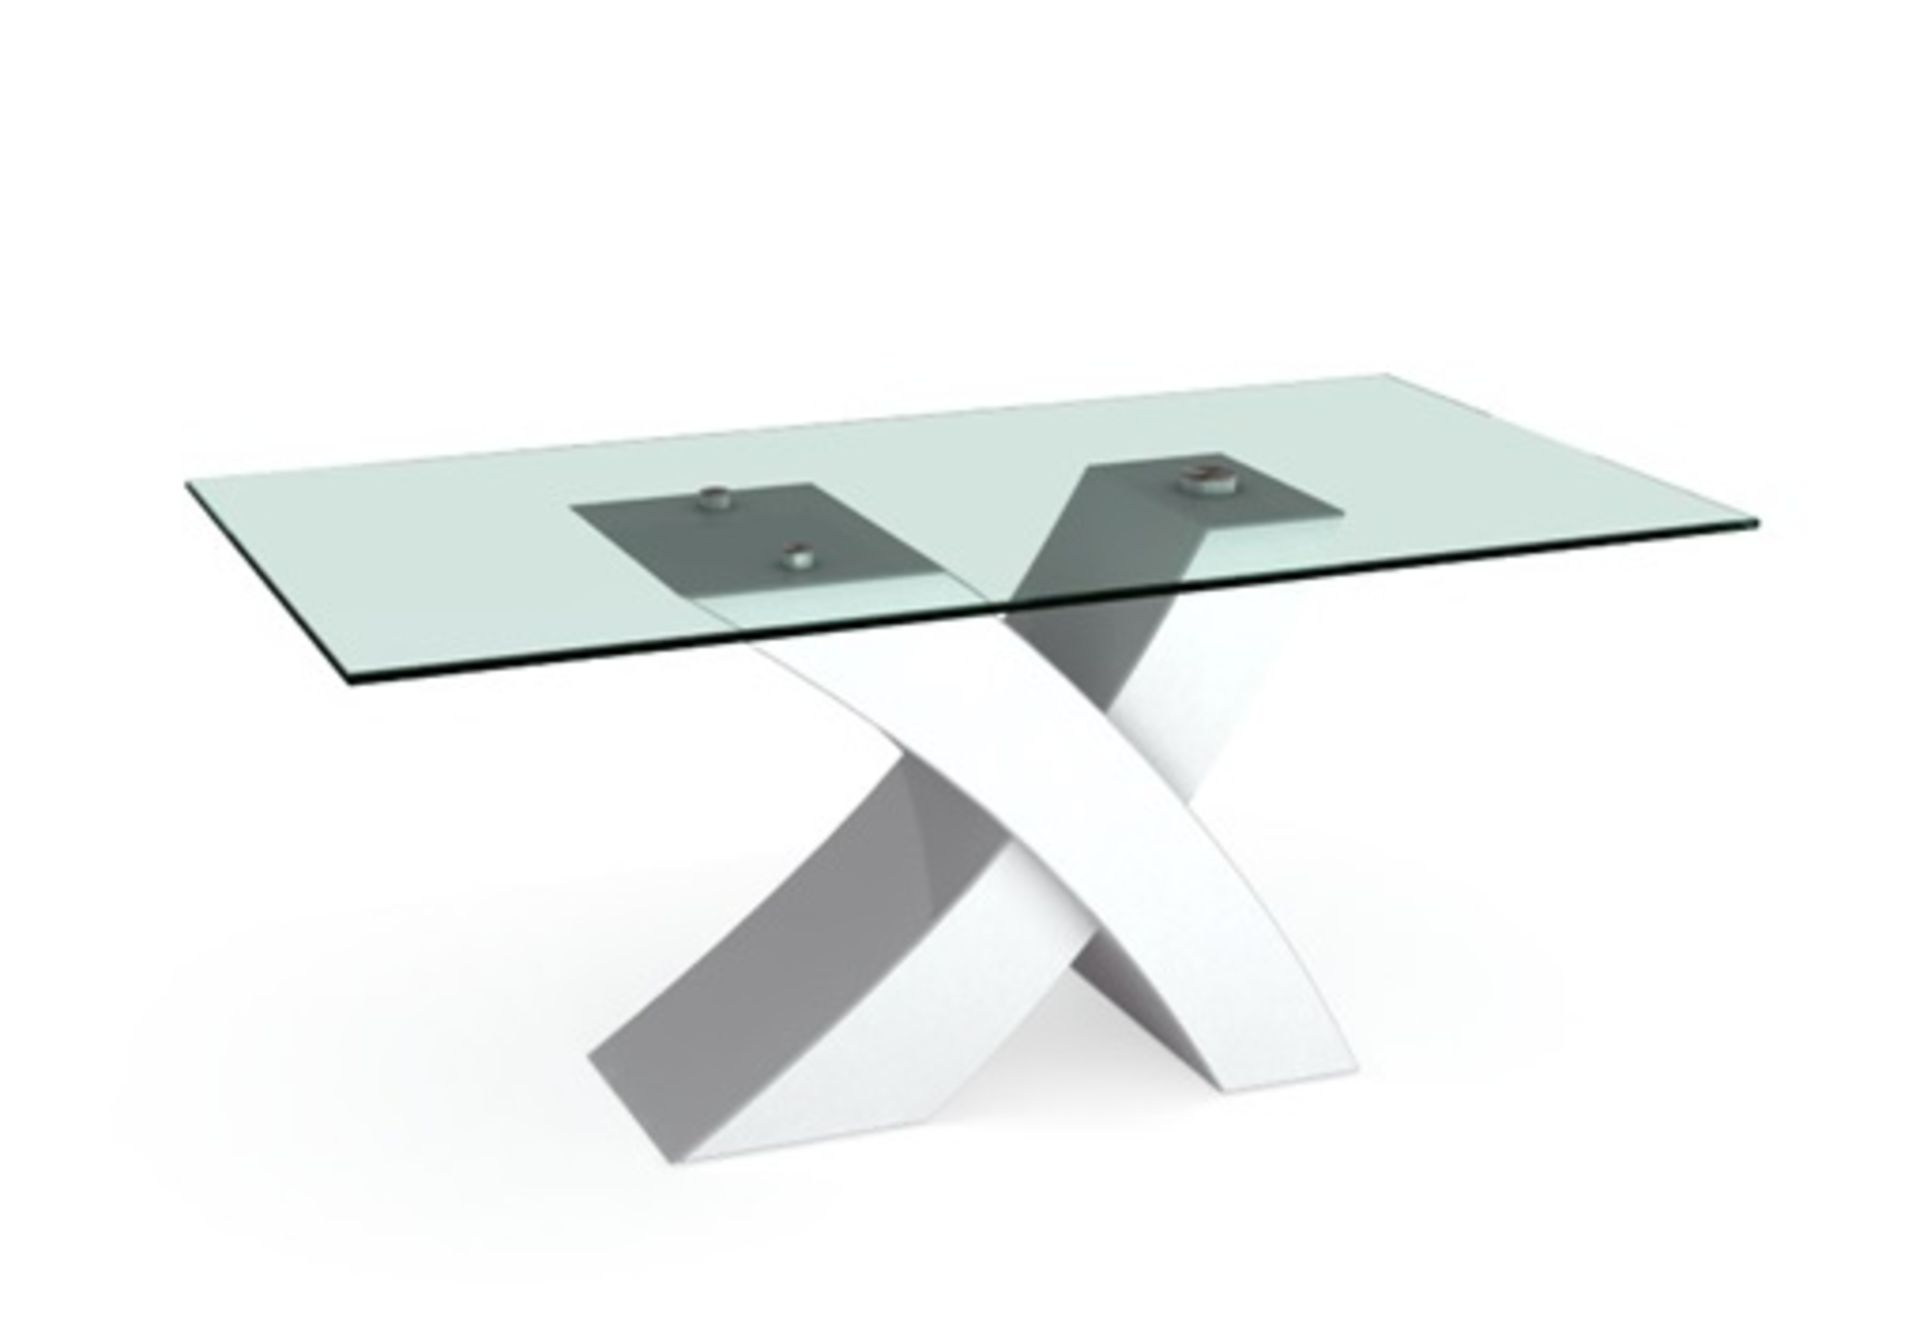 1 x Designer Glass Coffee Table - White Base, CTB420Wht (Brand New & Boxed)